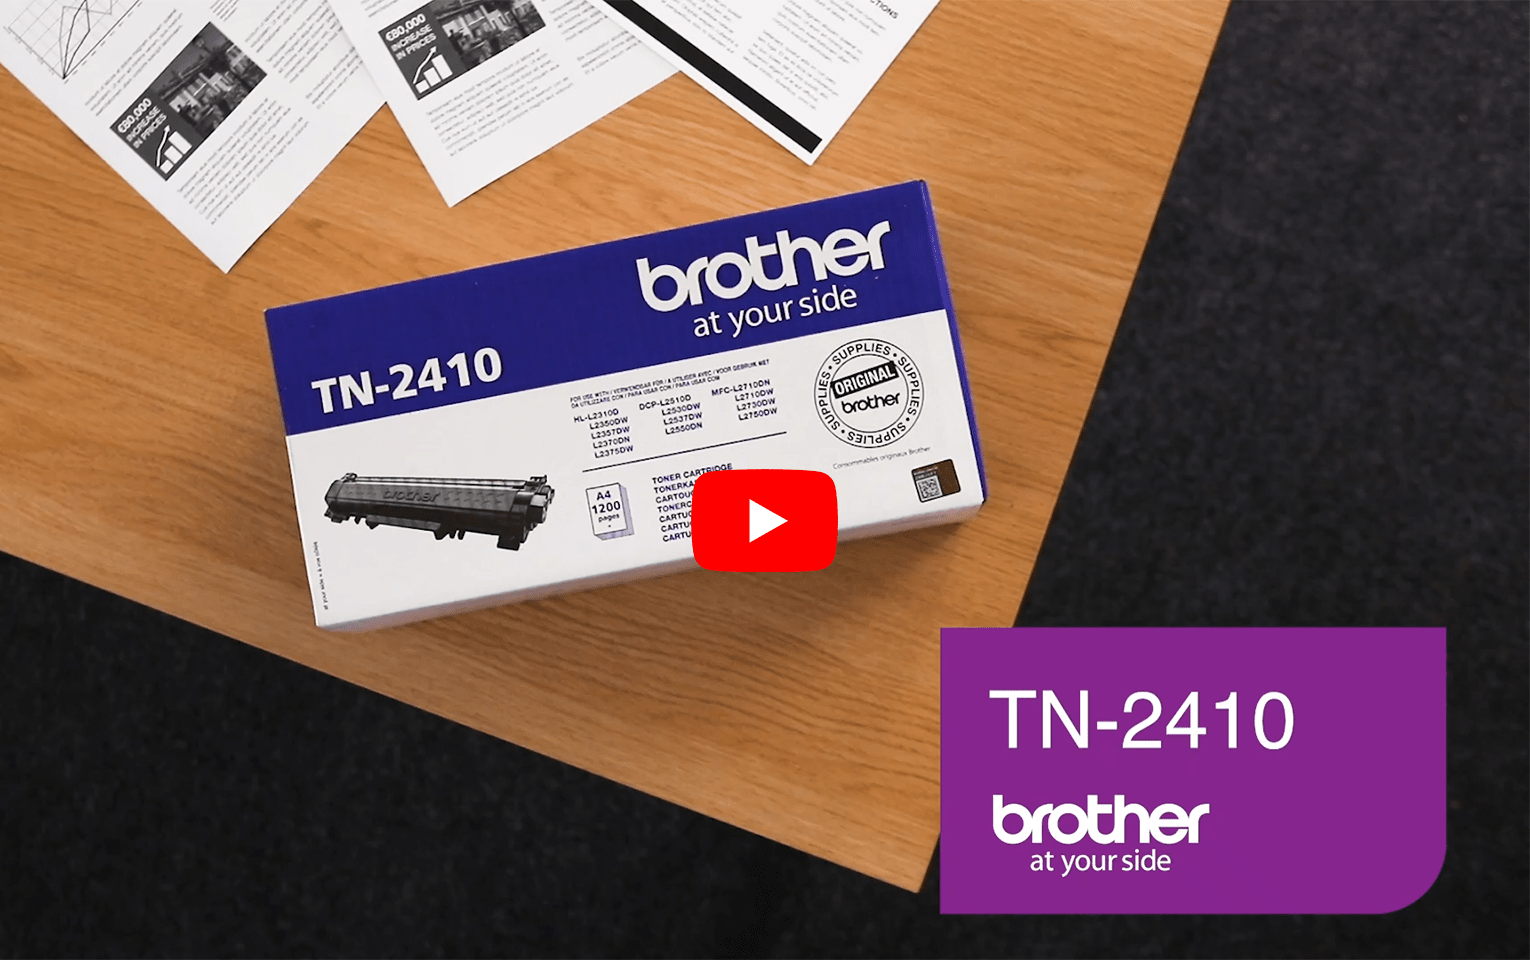 Brother TN-2410 Toner